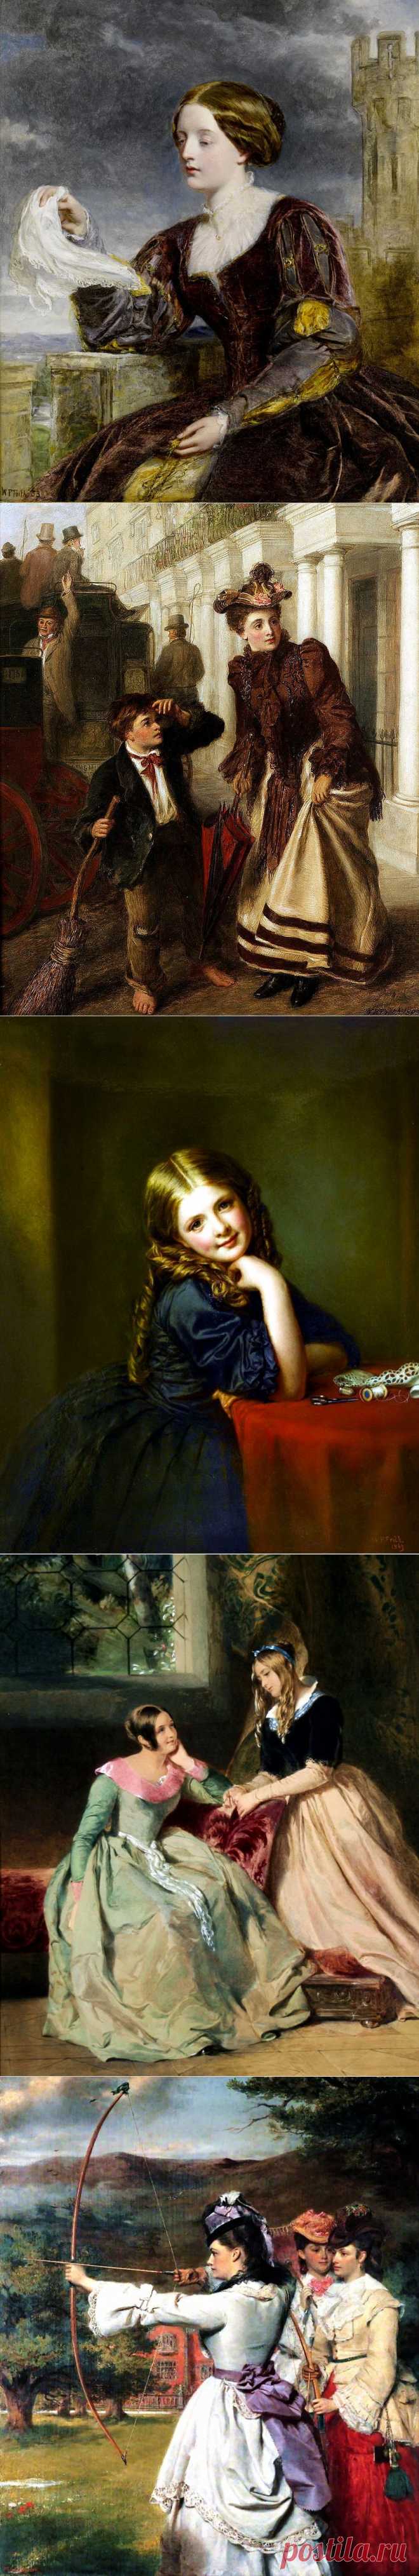 Английский художник Уильям Пауэлл Фрайт (1819-1909)